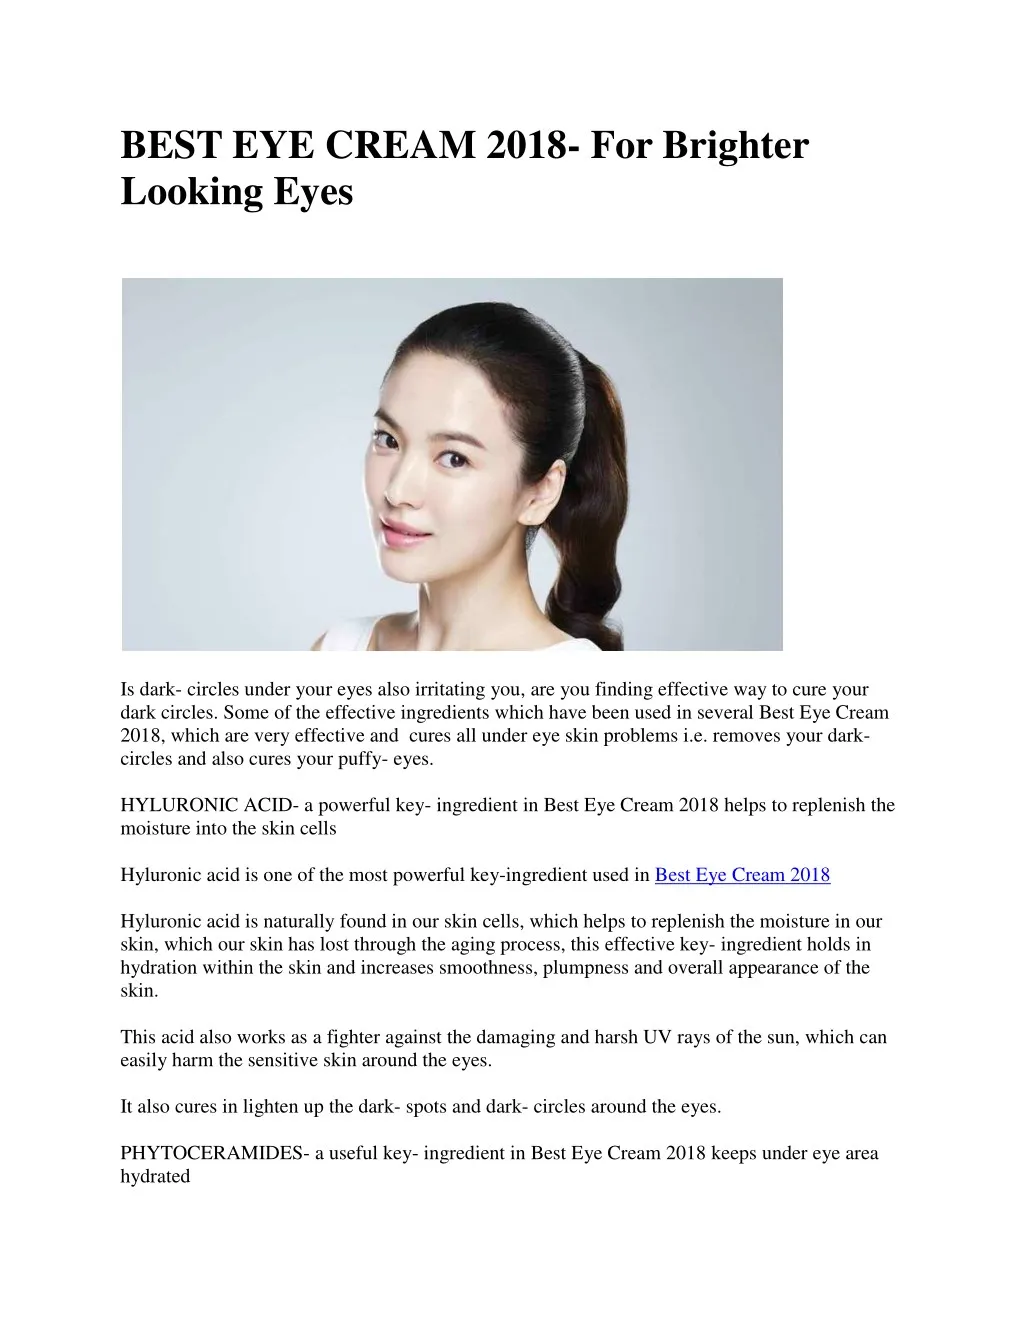 best eye cream 2018 for brighter looking eyes